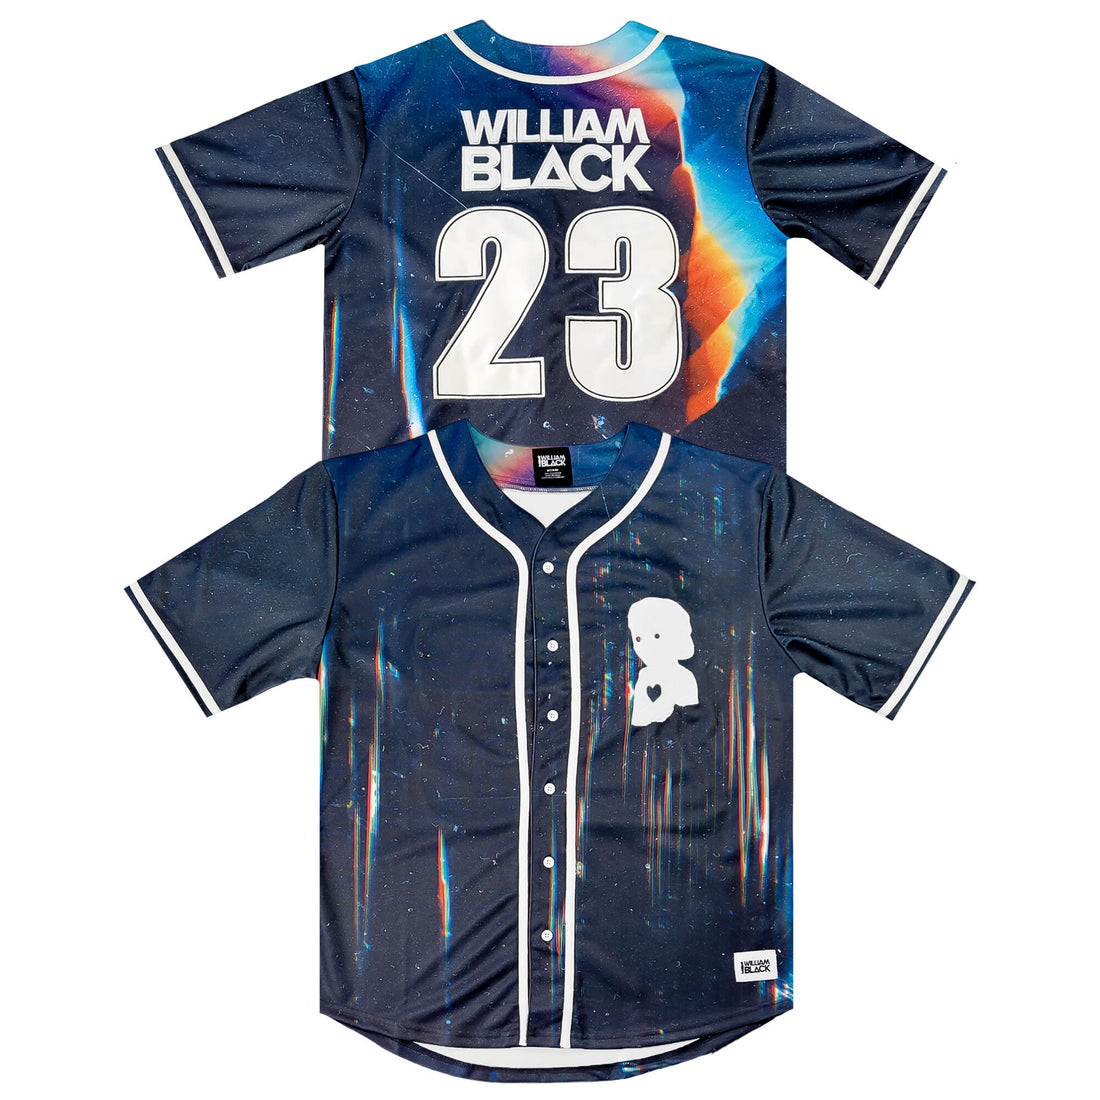 William Black  - Marble 2023 - Baseball Jersey